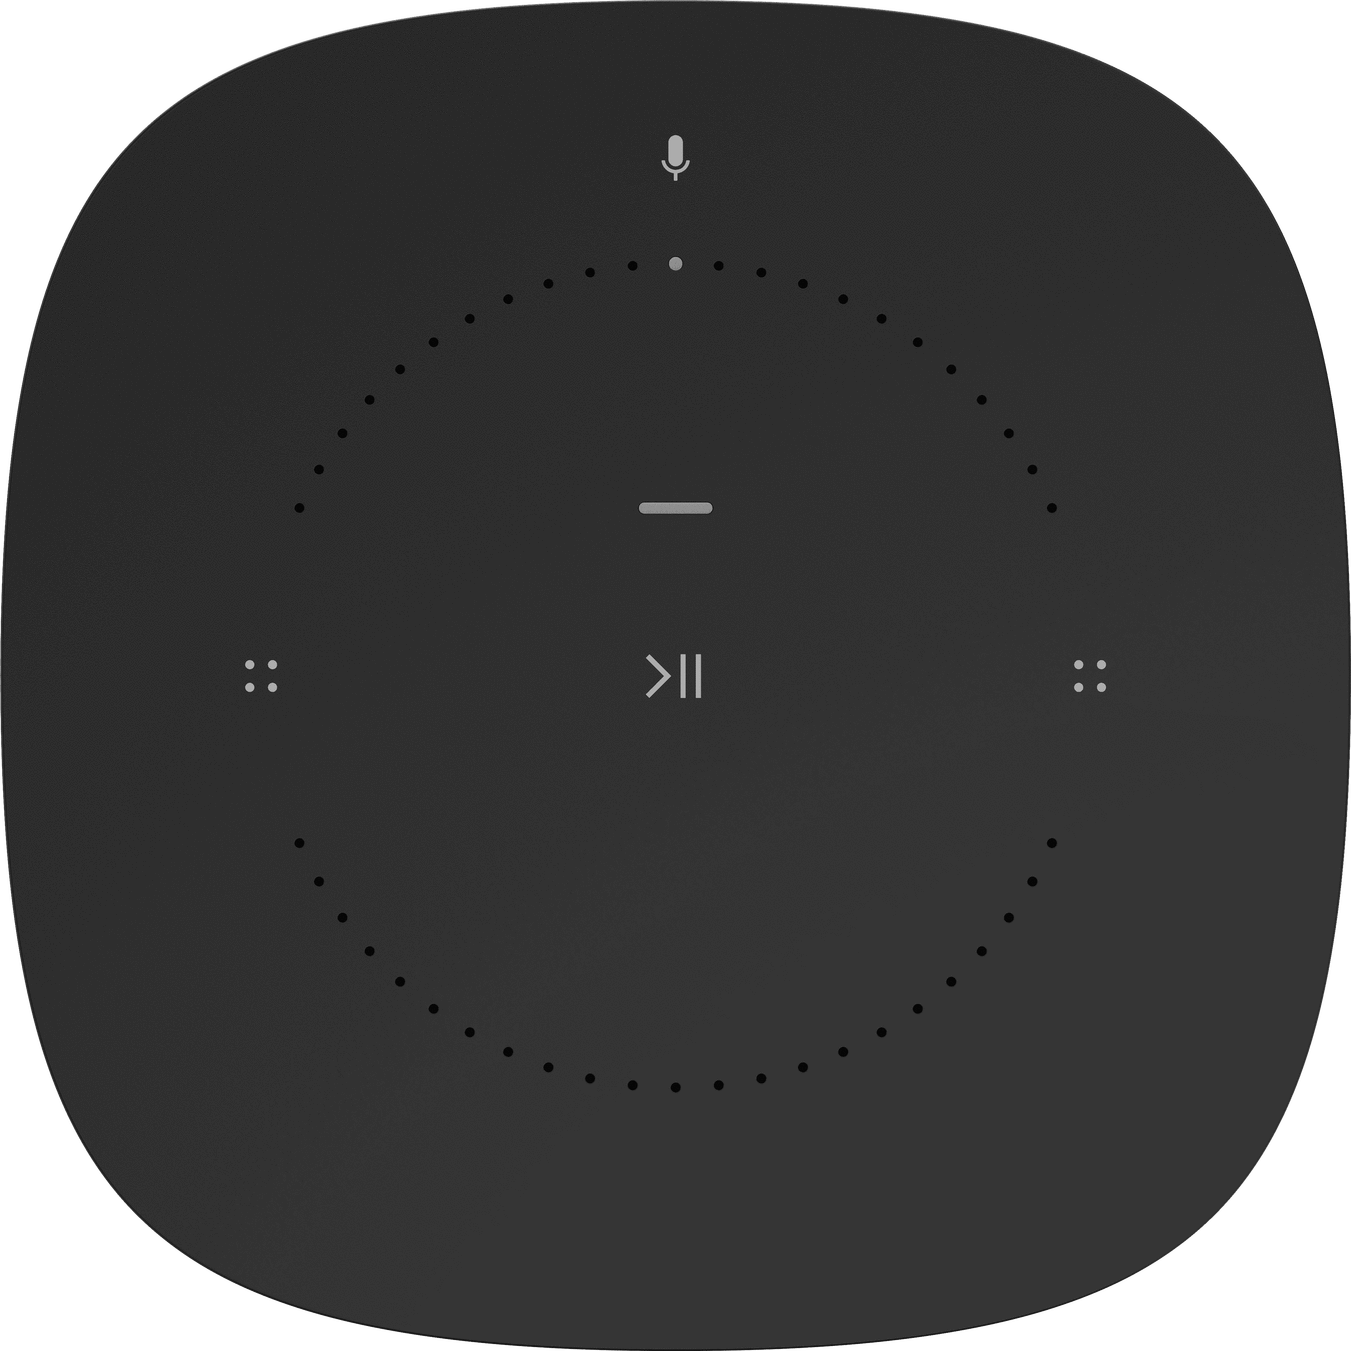 Sonos One speaker